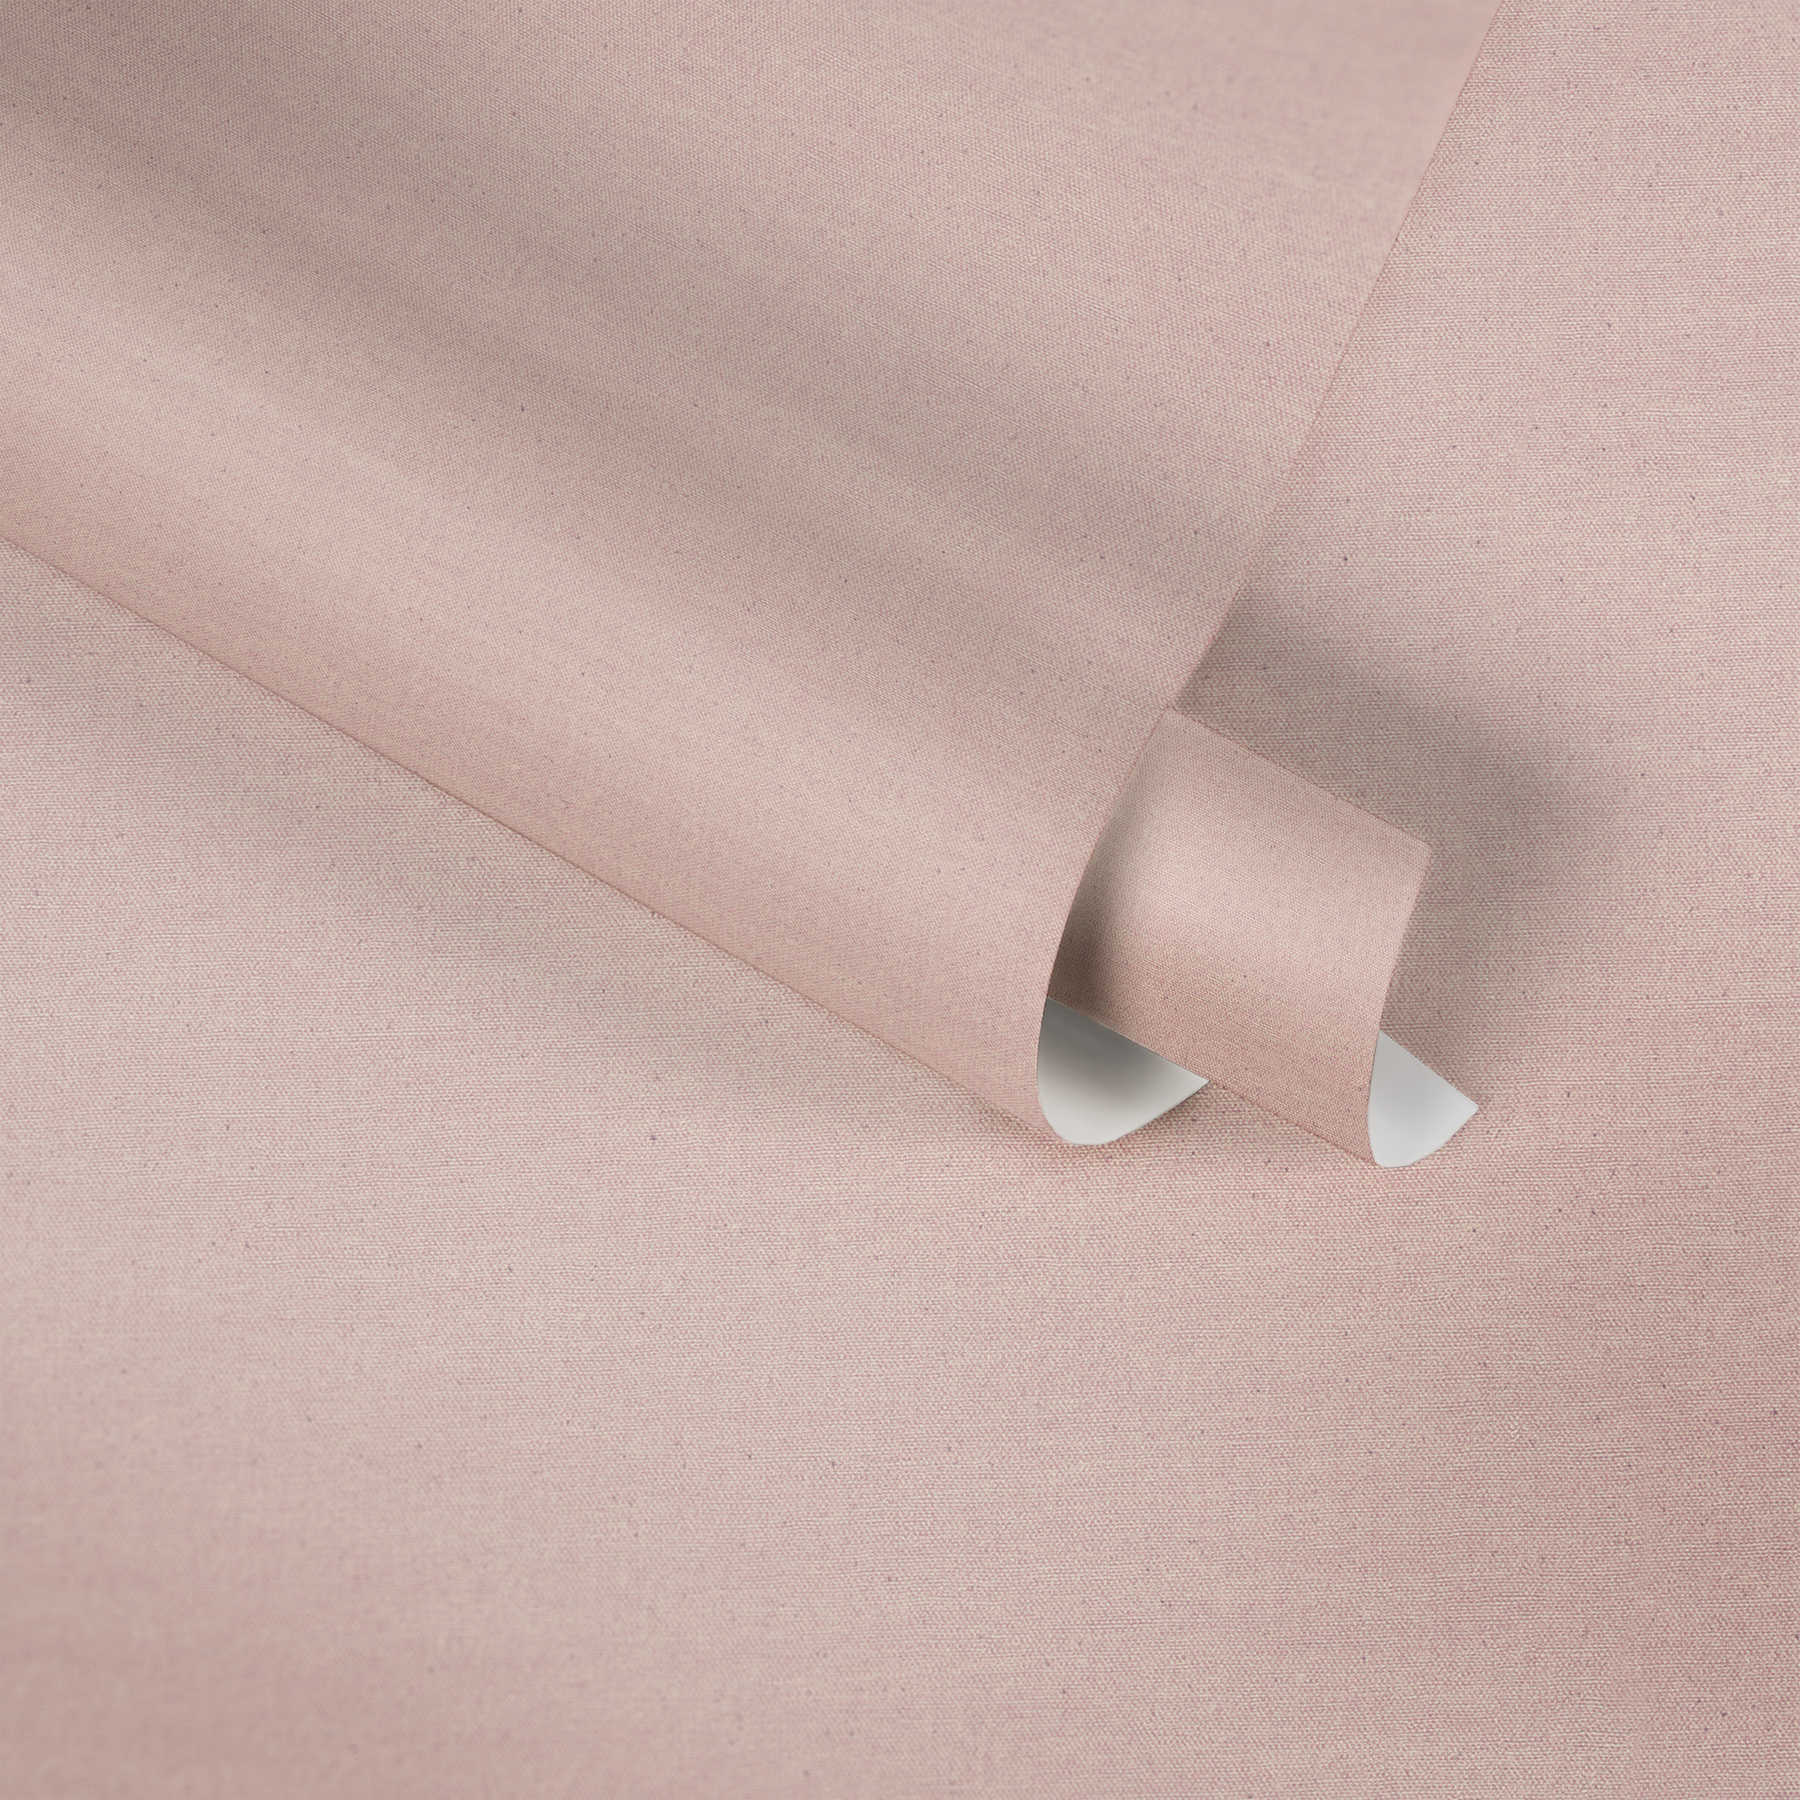             Plain wallpaper pink textile design with grey polka dots
        